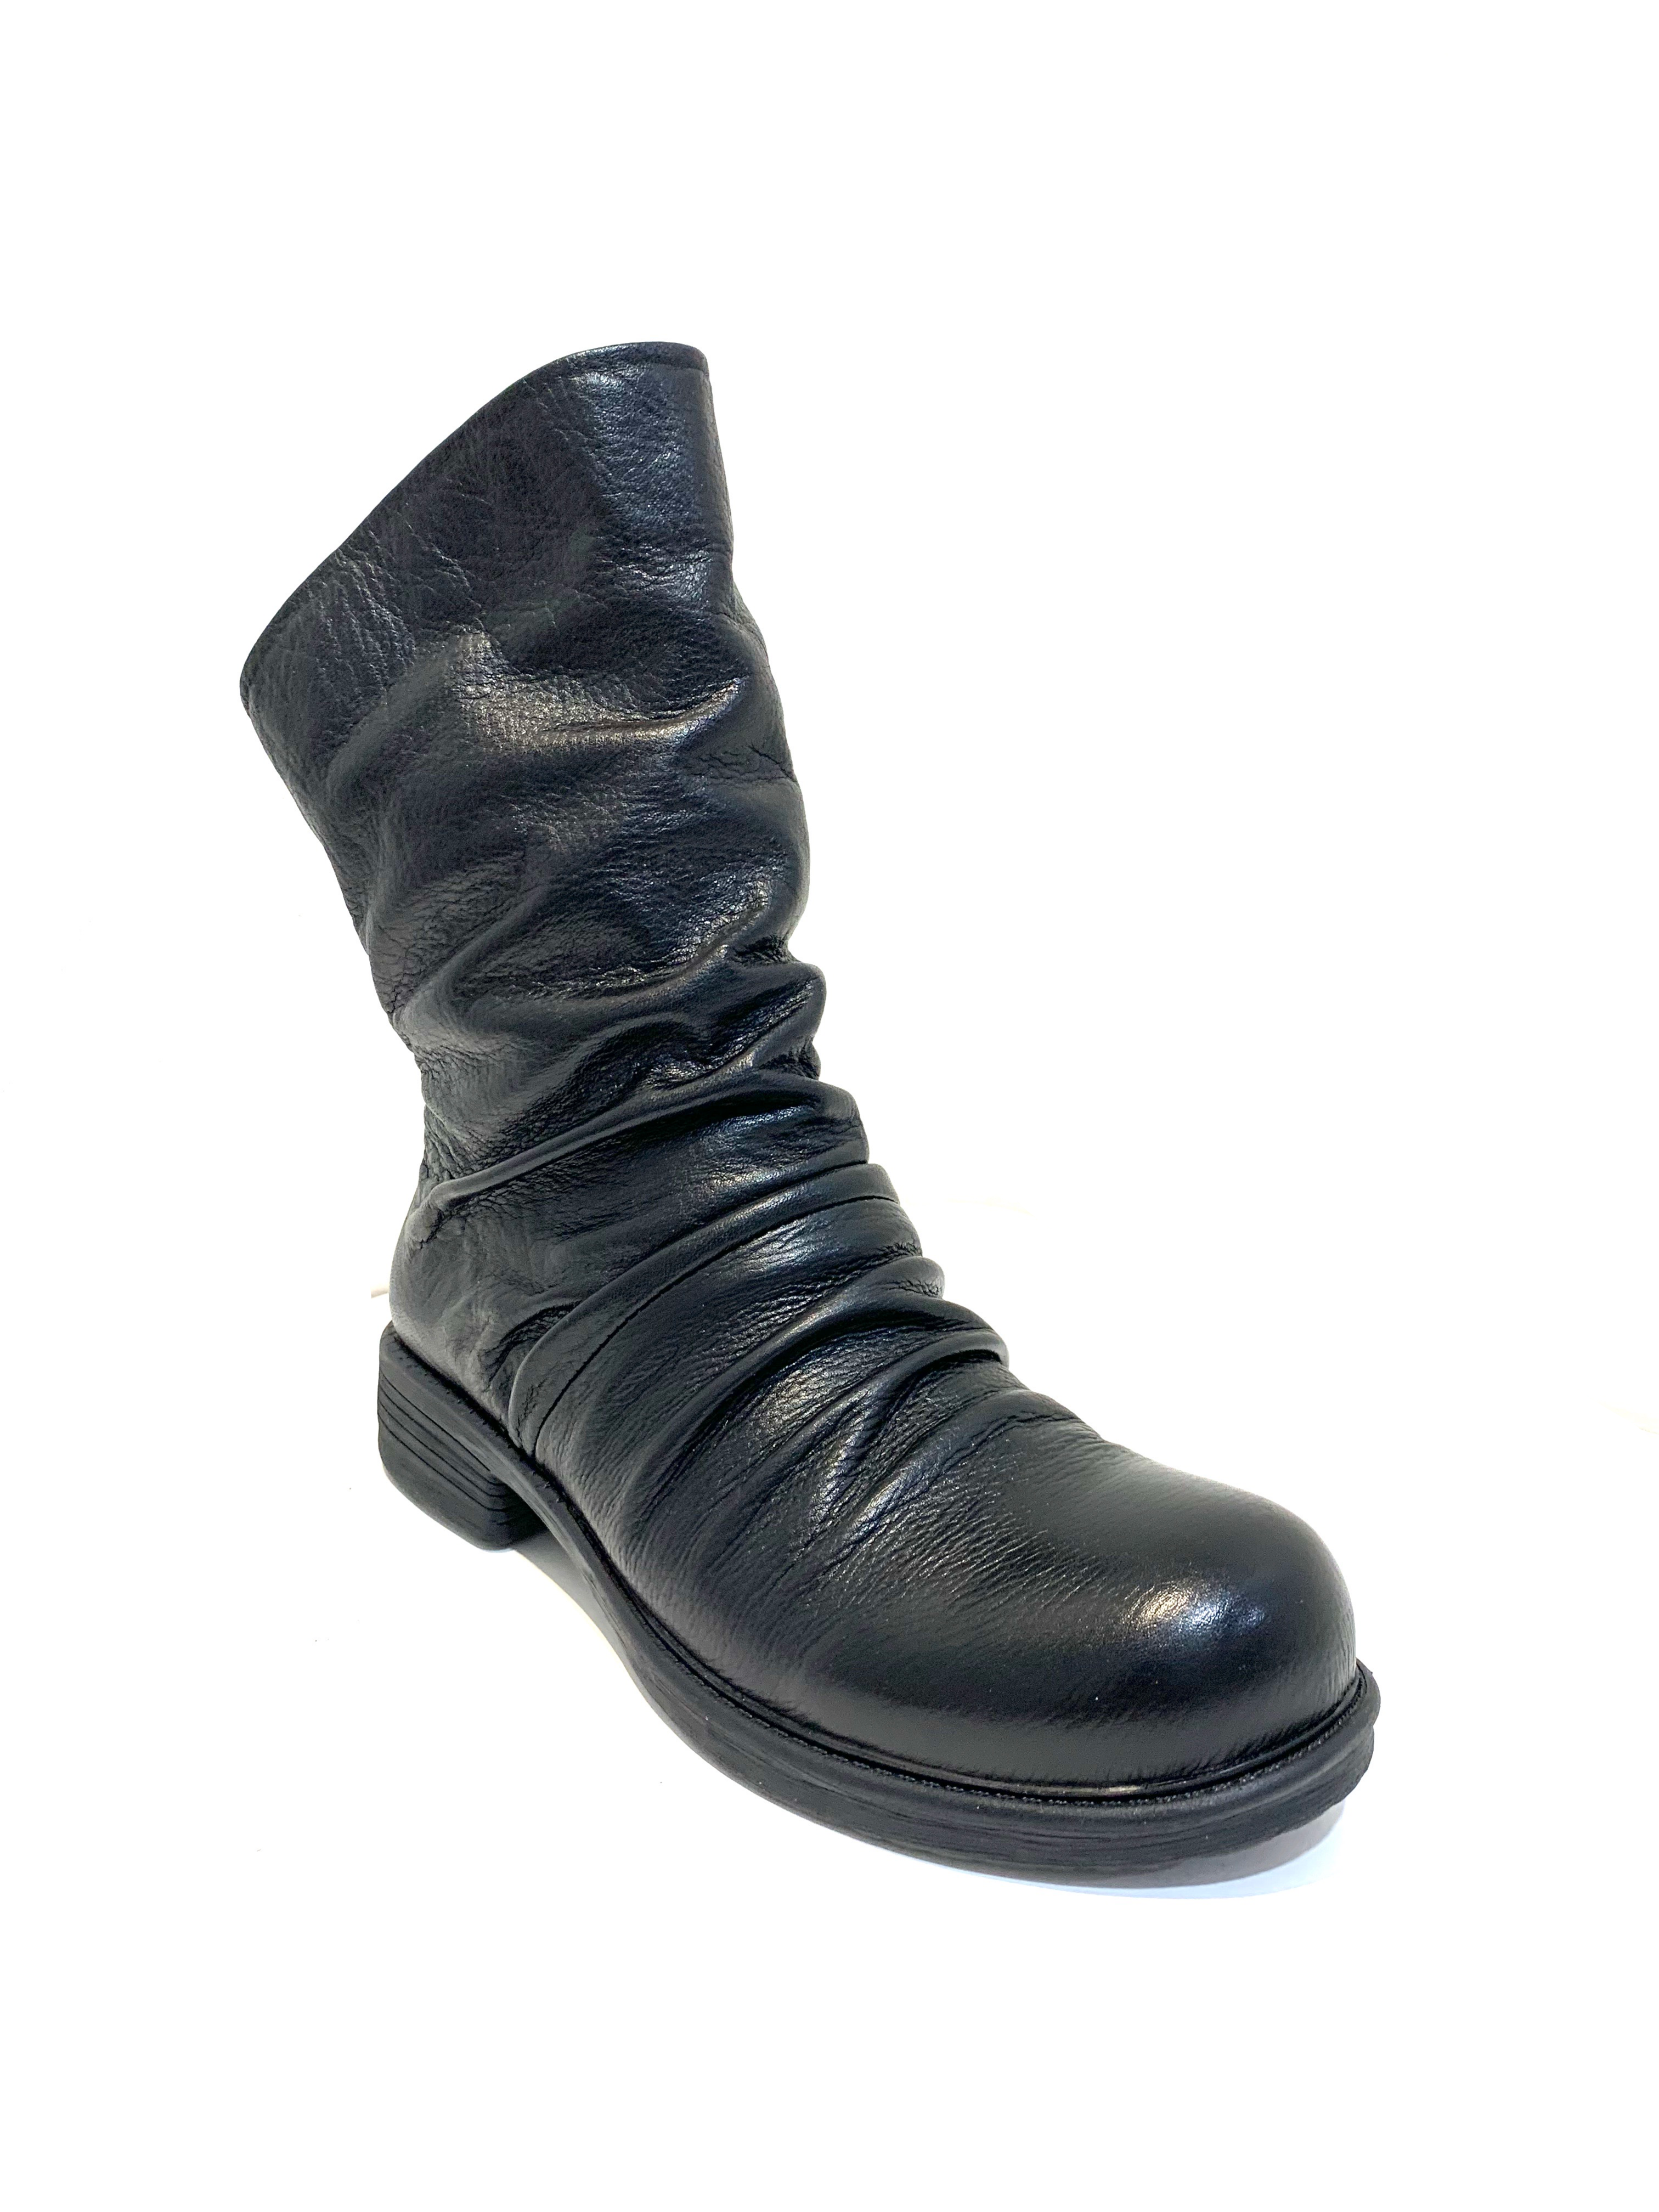 Minki Ladies Boots Campbell Black Zip Mid Calf